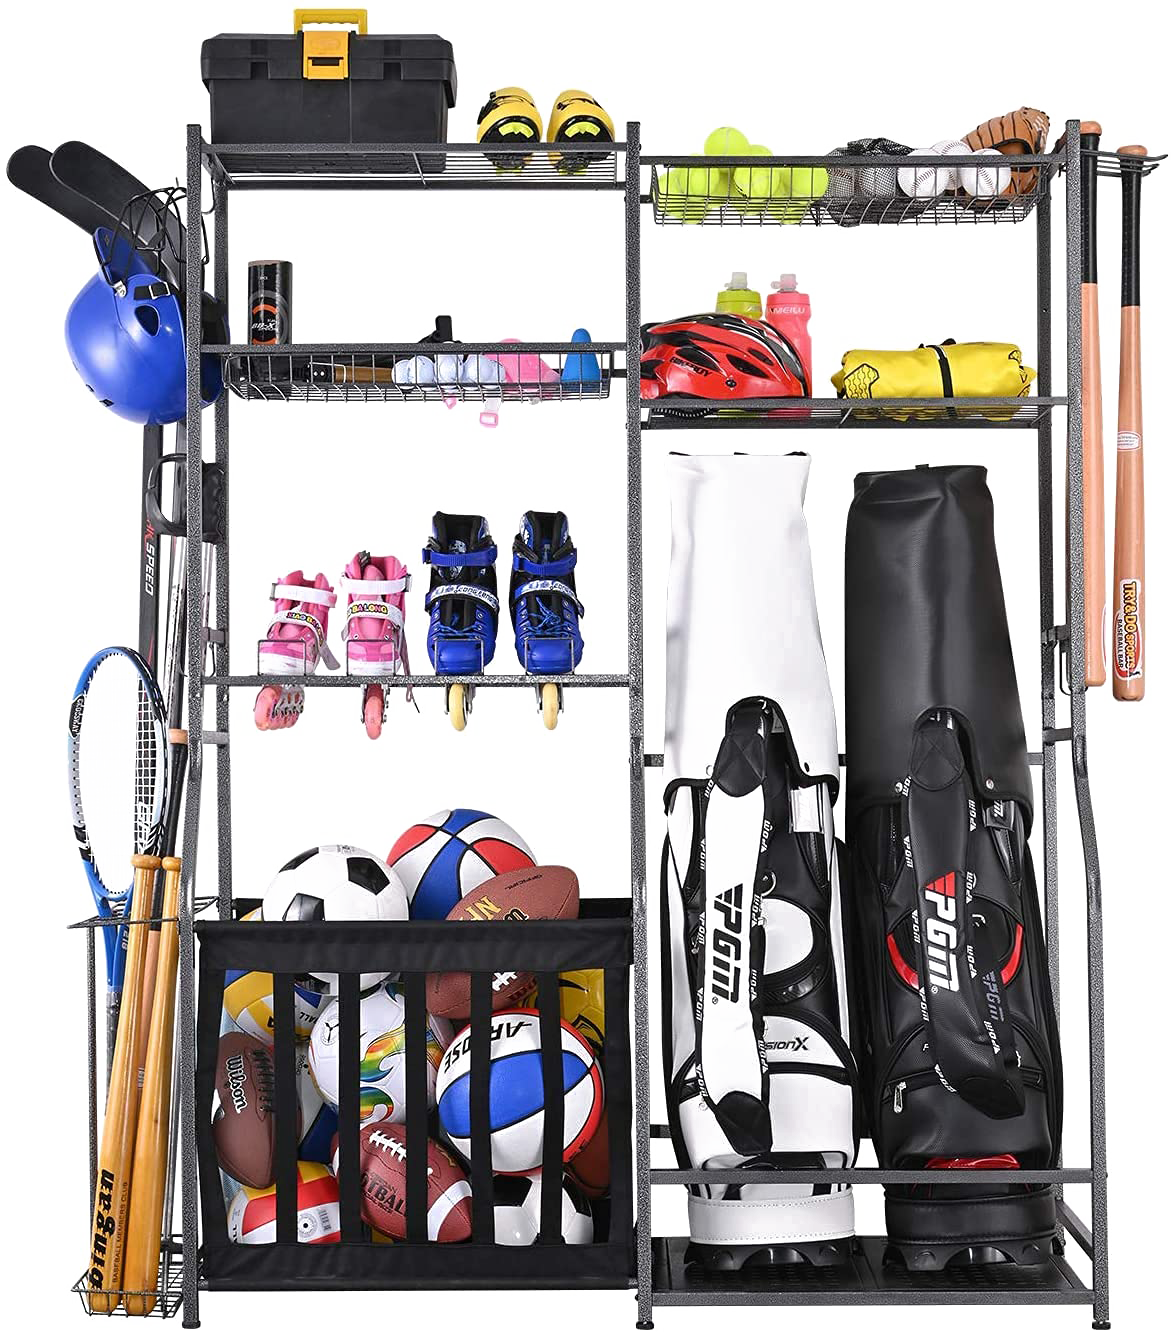 Mythinglogic Golf Storage Garage Organizer,Golf Bag Storage Stand and Other Golfing Equipment Rack